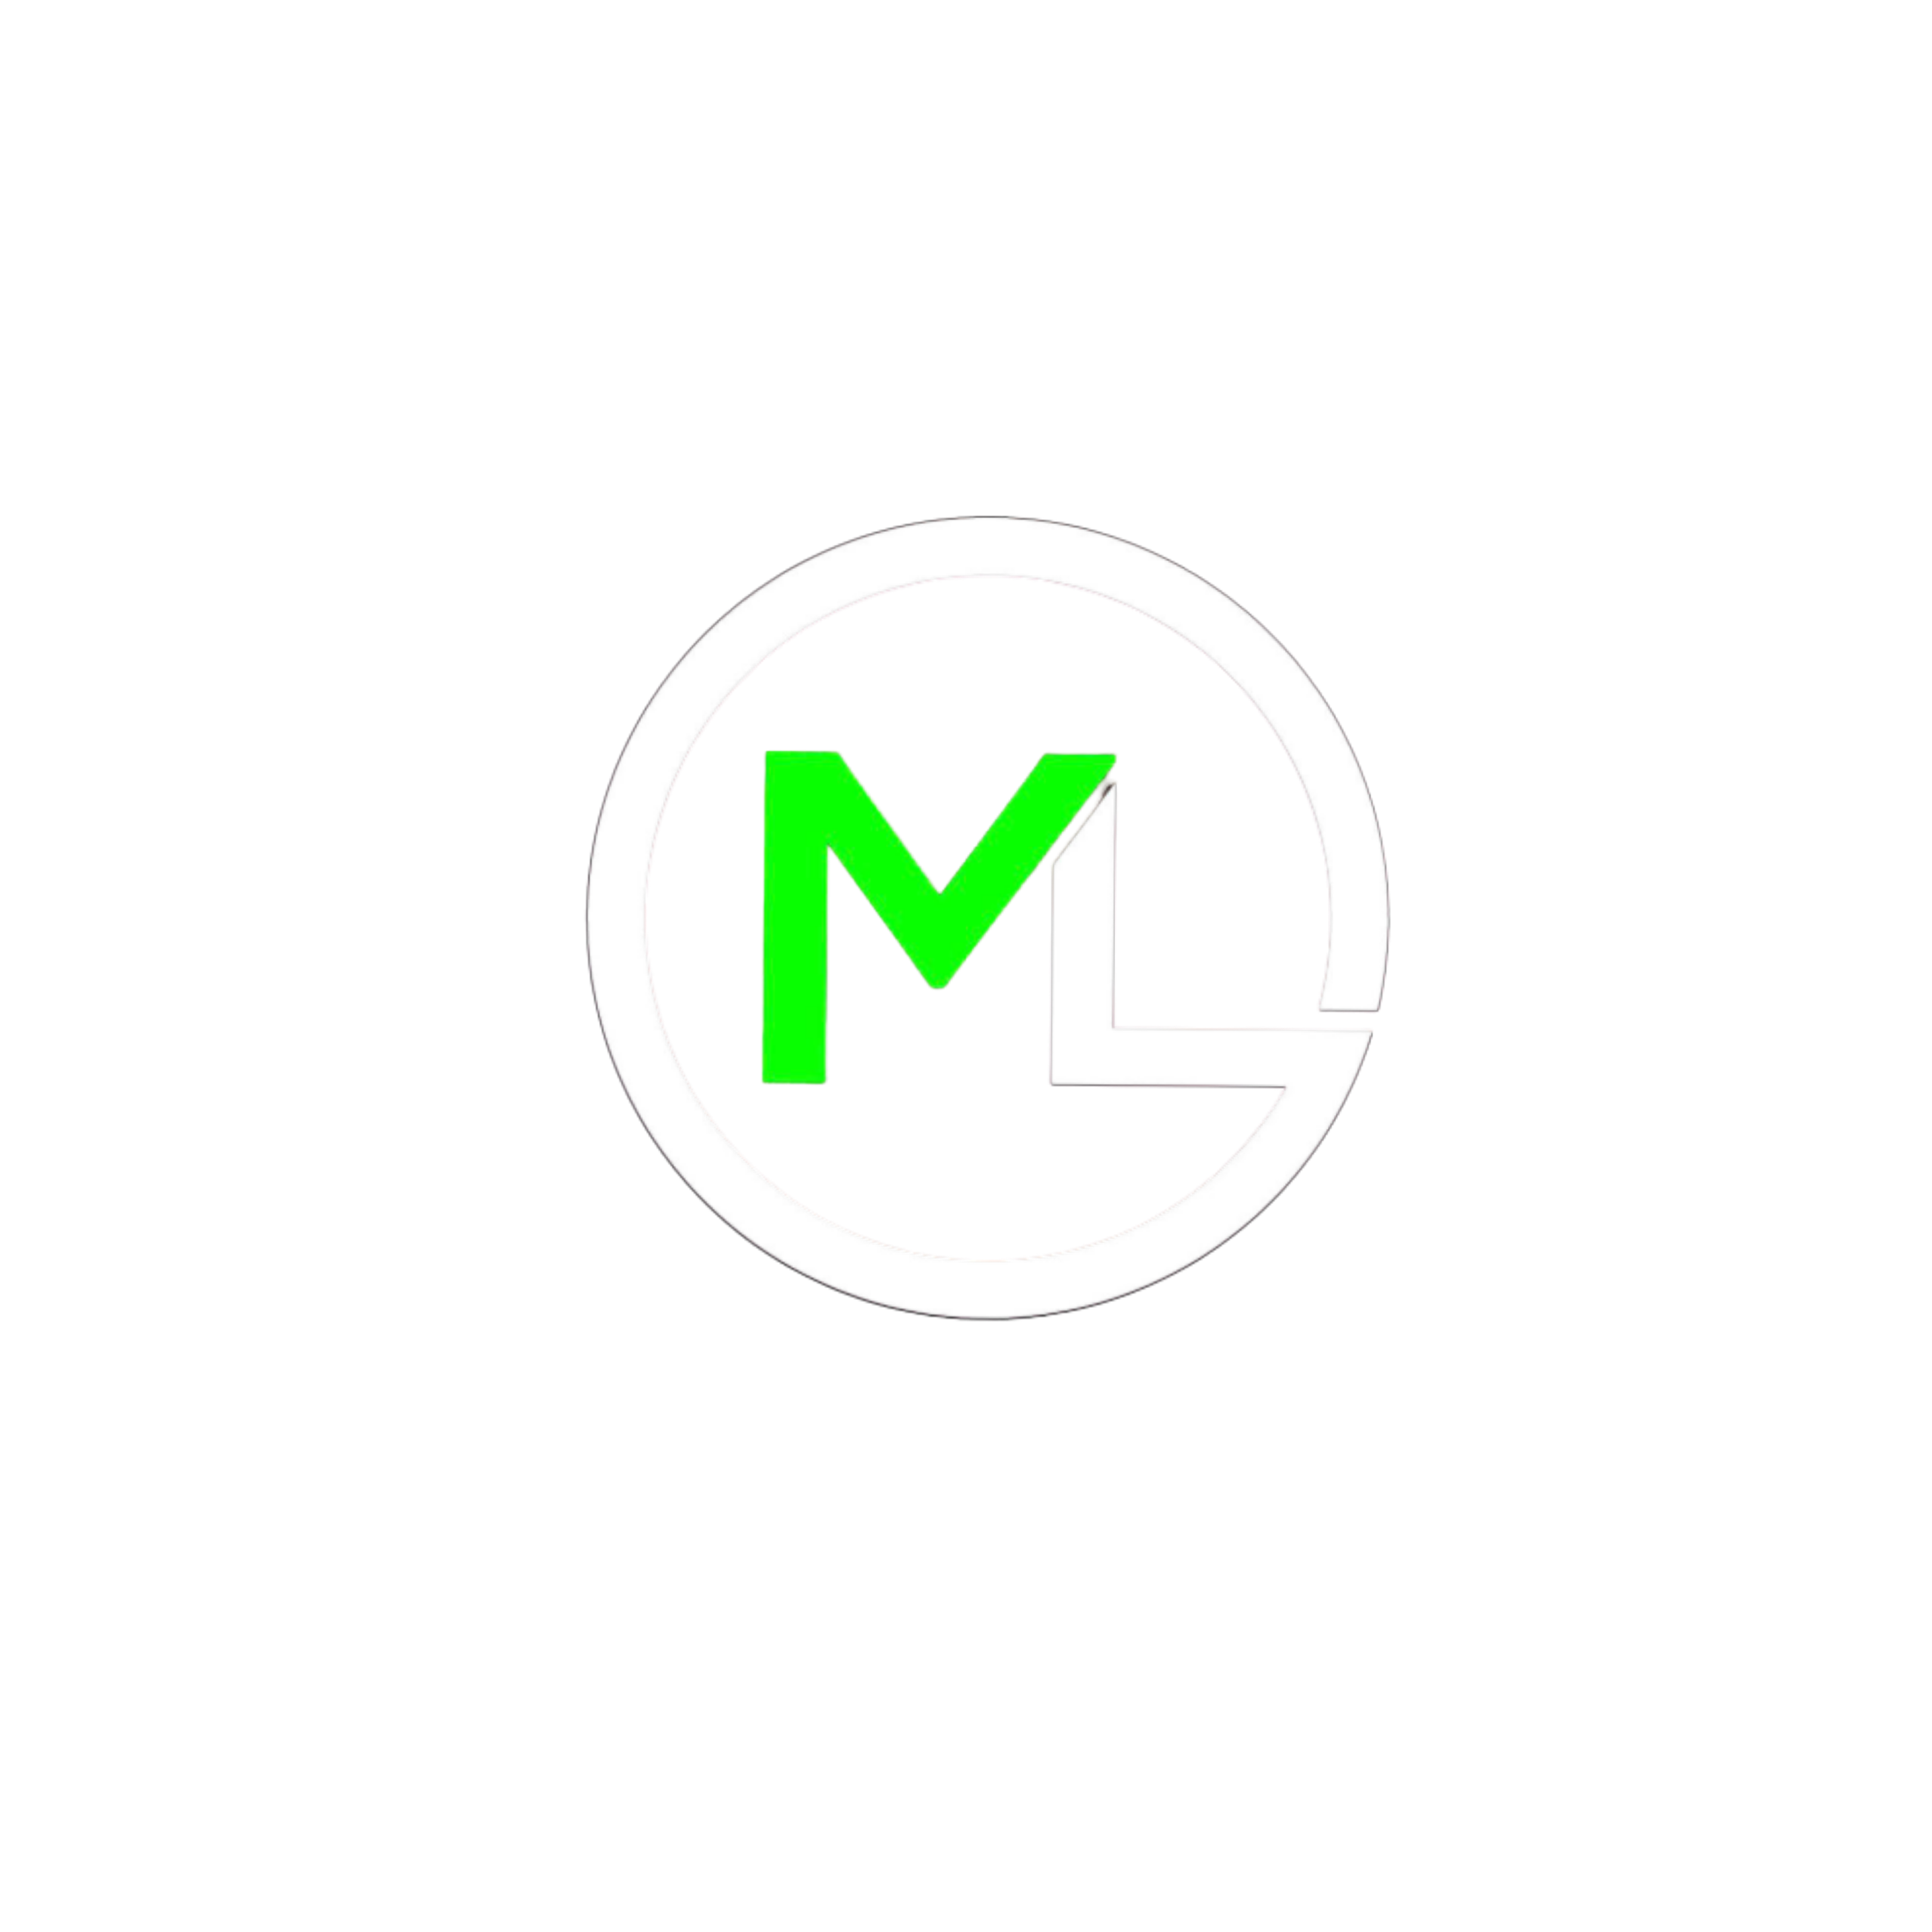 Matt Sneakers